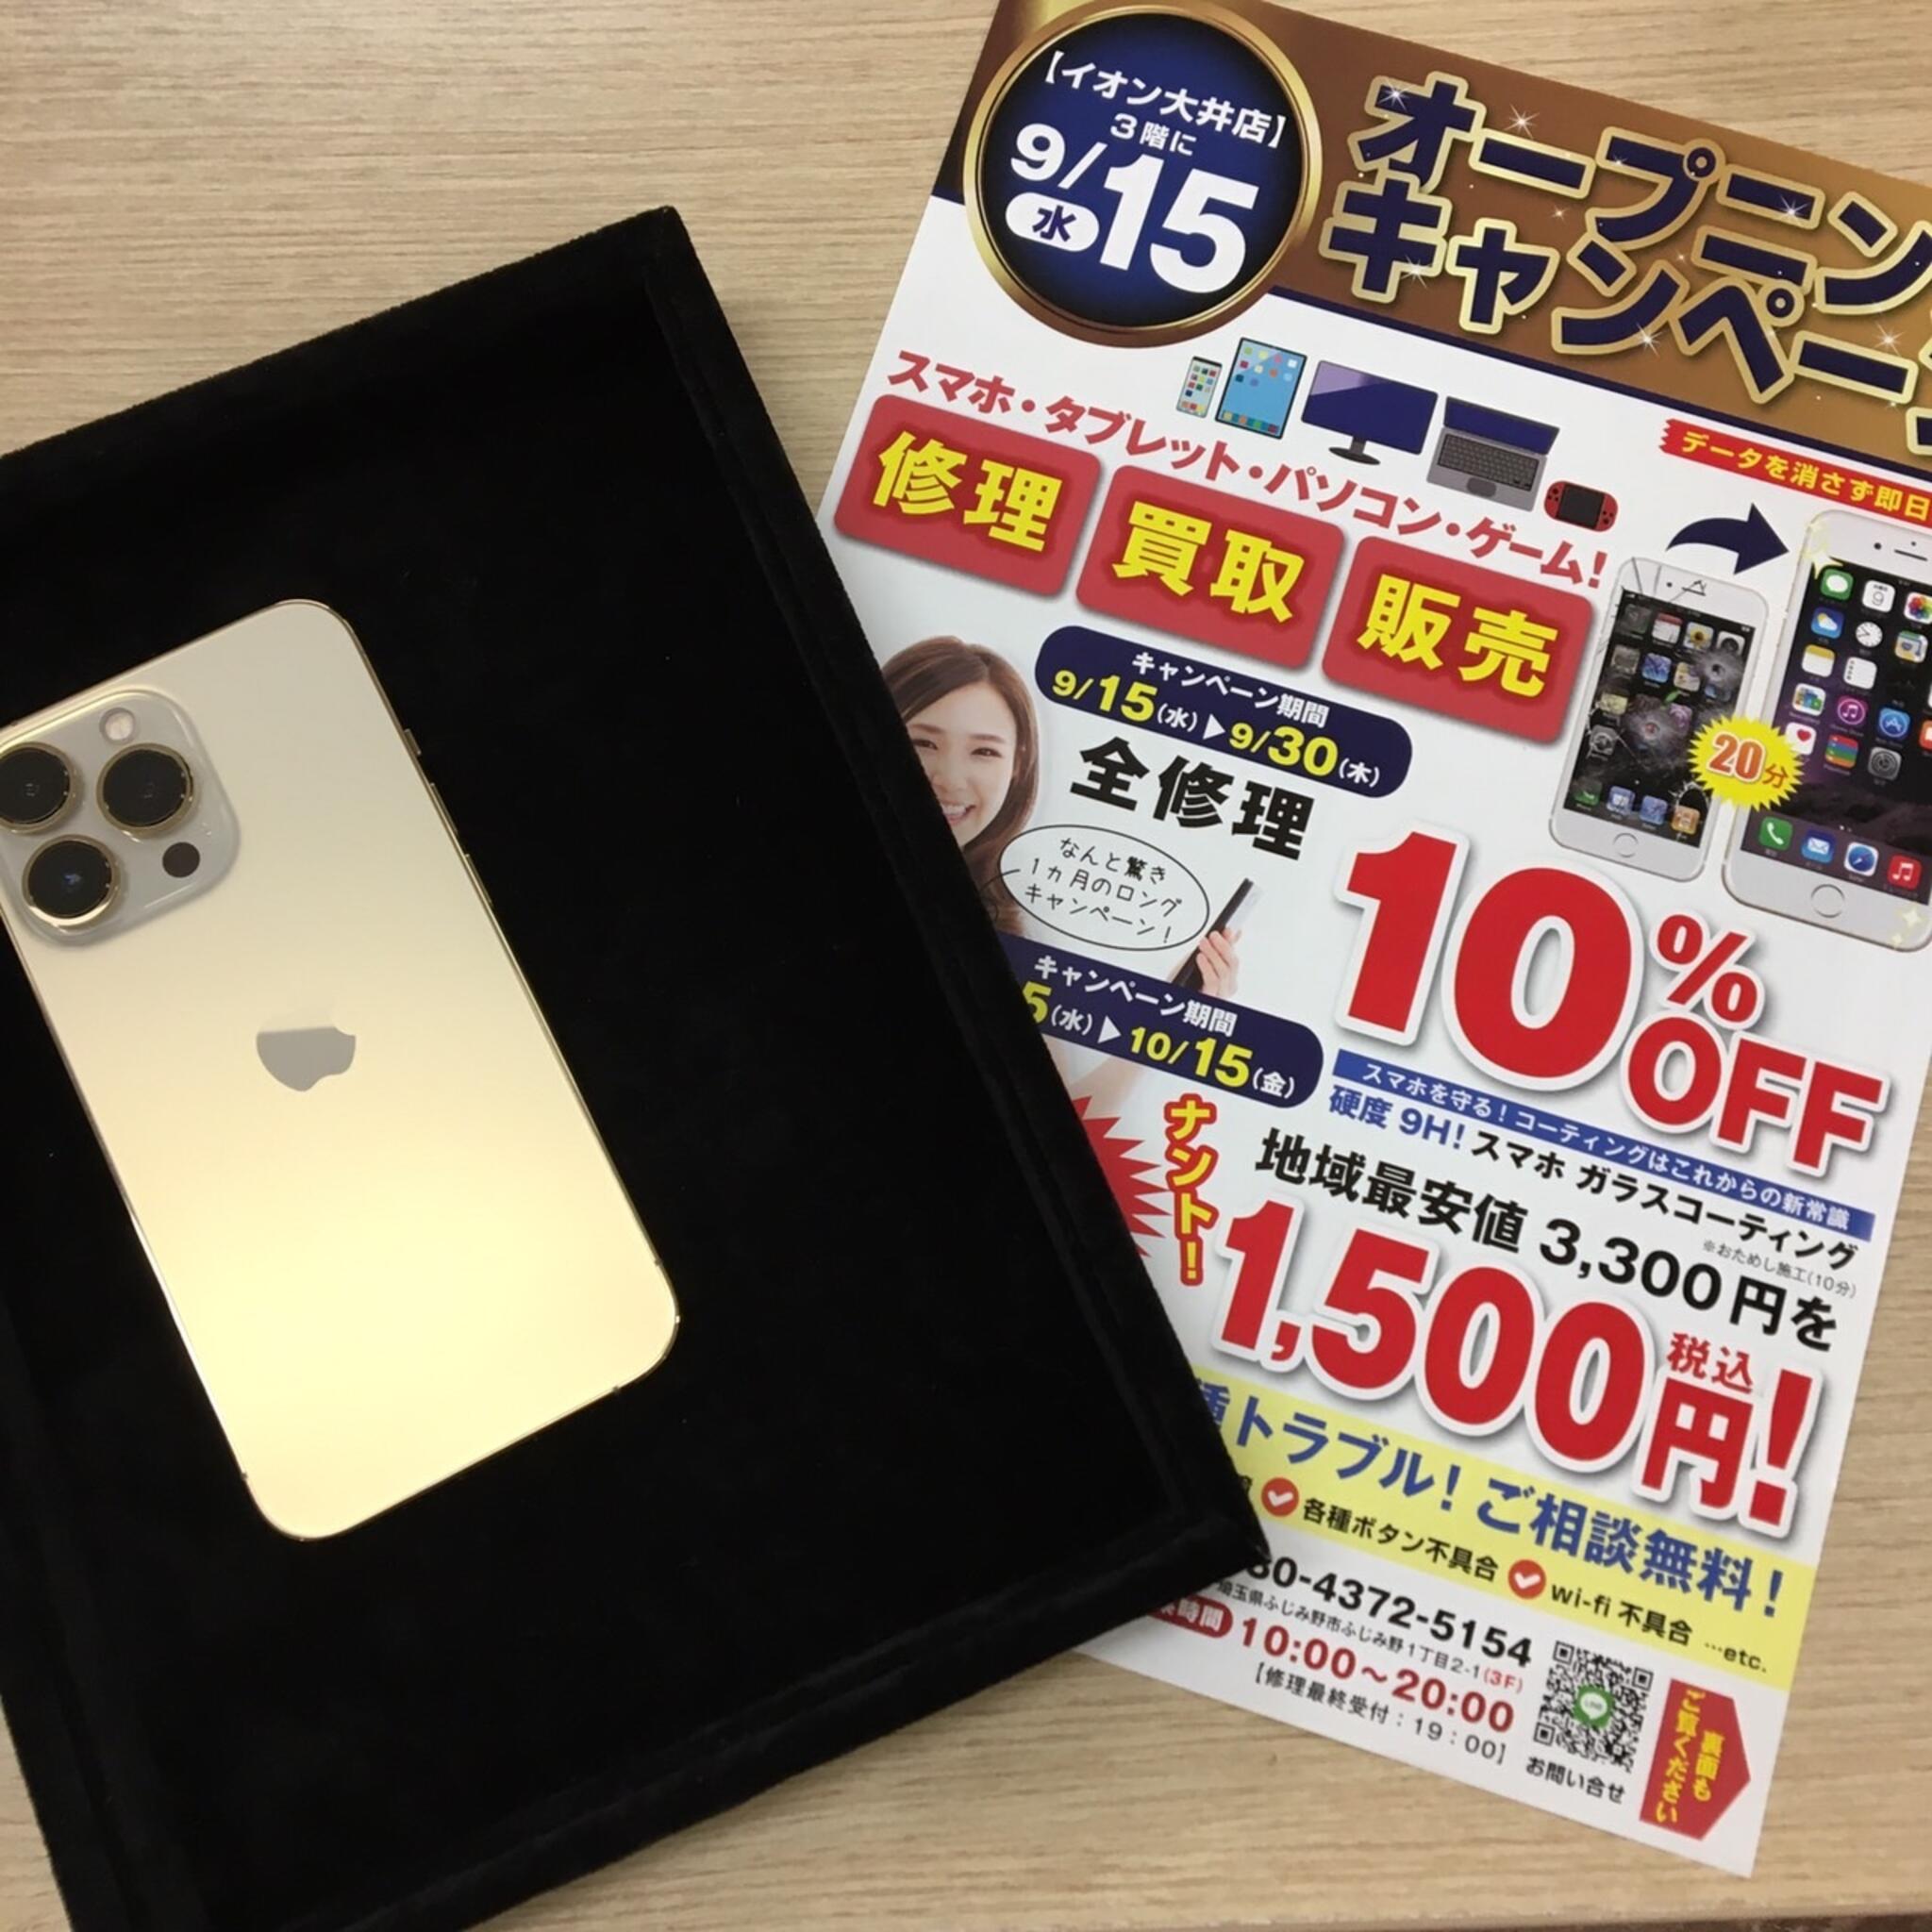 iPhone修理 ダイワンテレコム ふじみ野イオン大井店の代表写真7